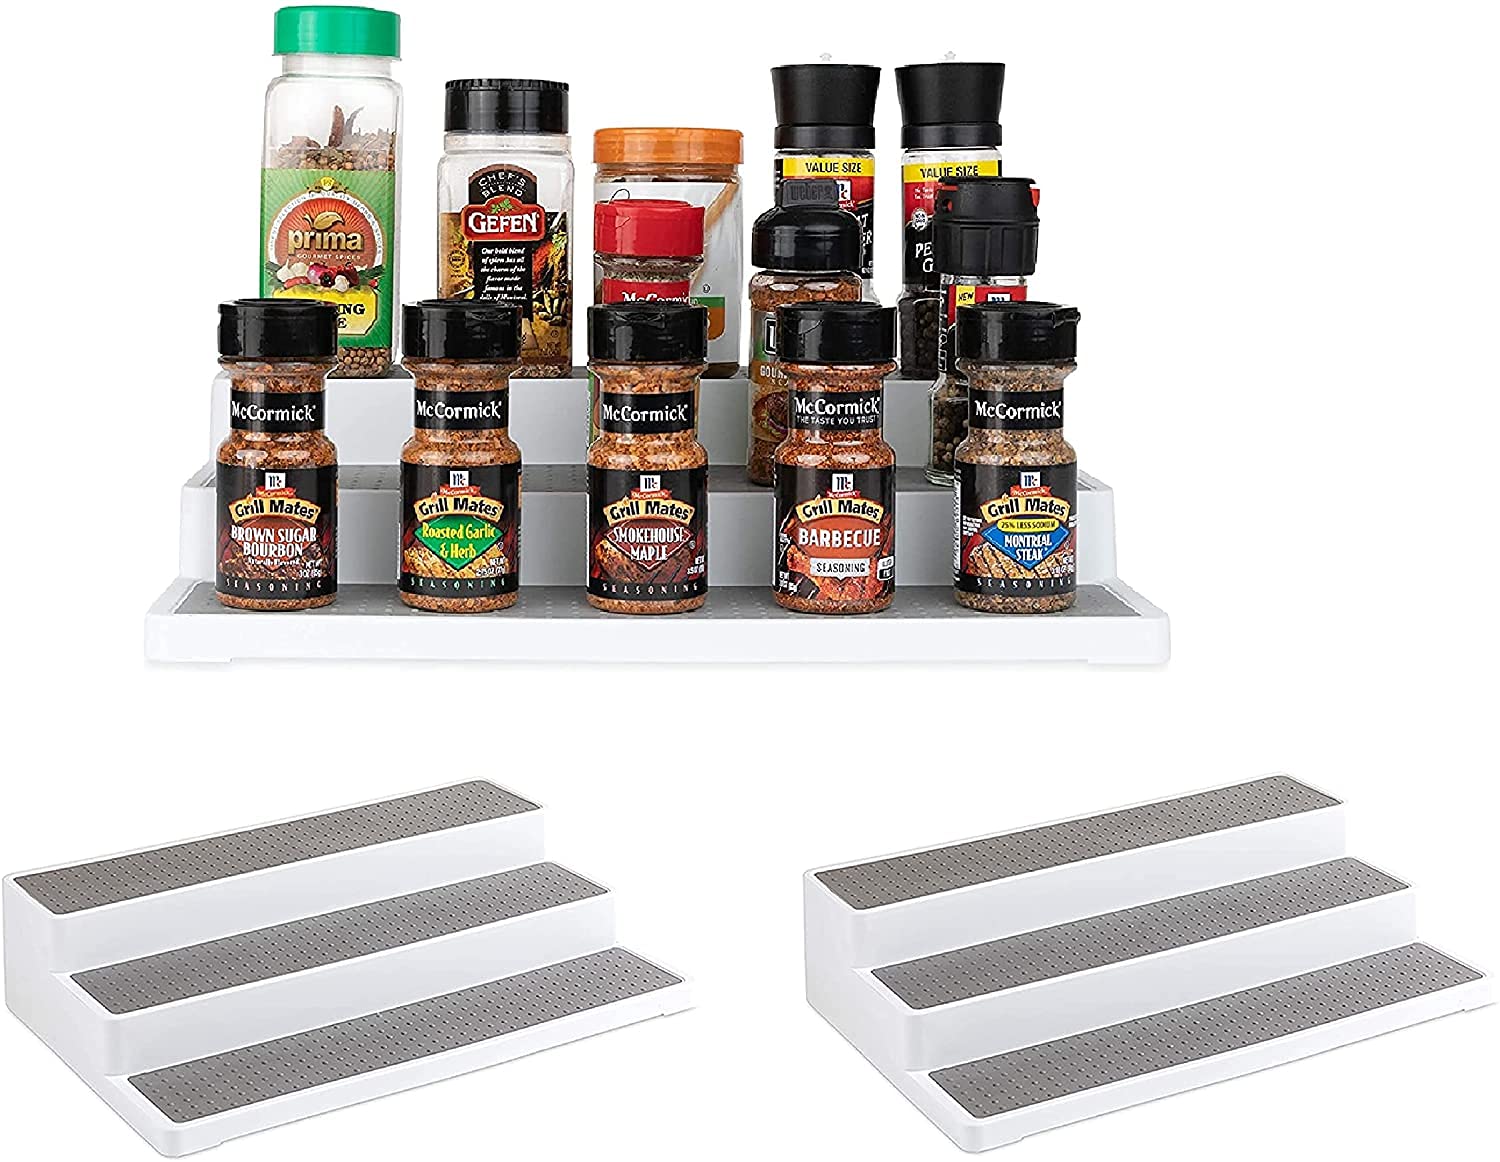 Homeries Spice Rack organizer 3-Tier Non-Skid for Pantry Cabinet or Countertop, Waterproof, For Spice Bottles, Jars, Seasonings, Baking Supplies (3 Pack)  - Good